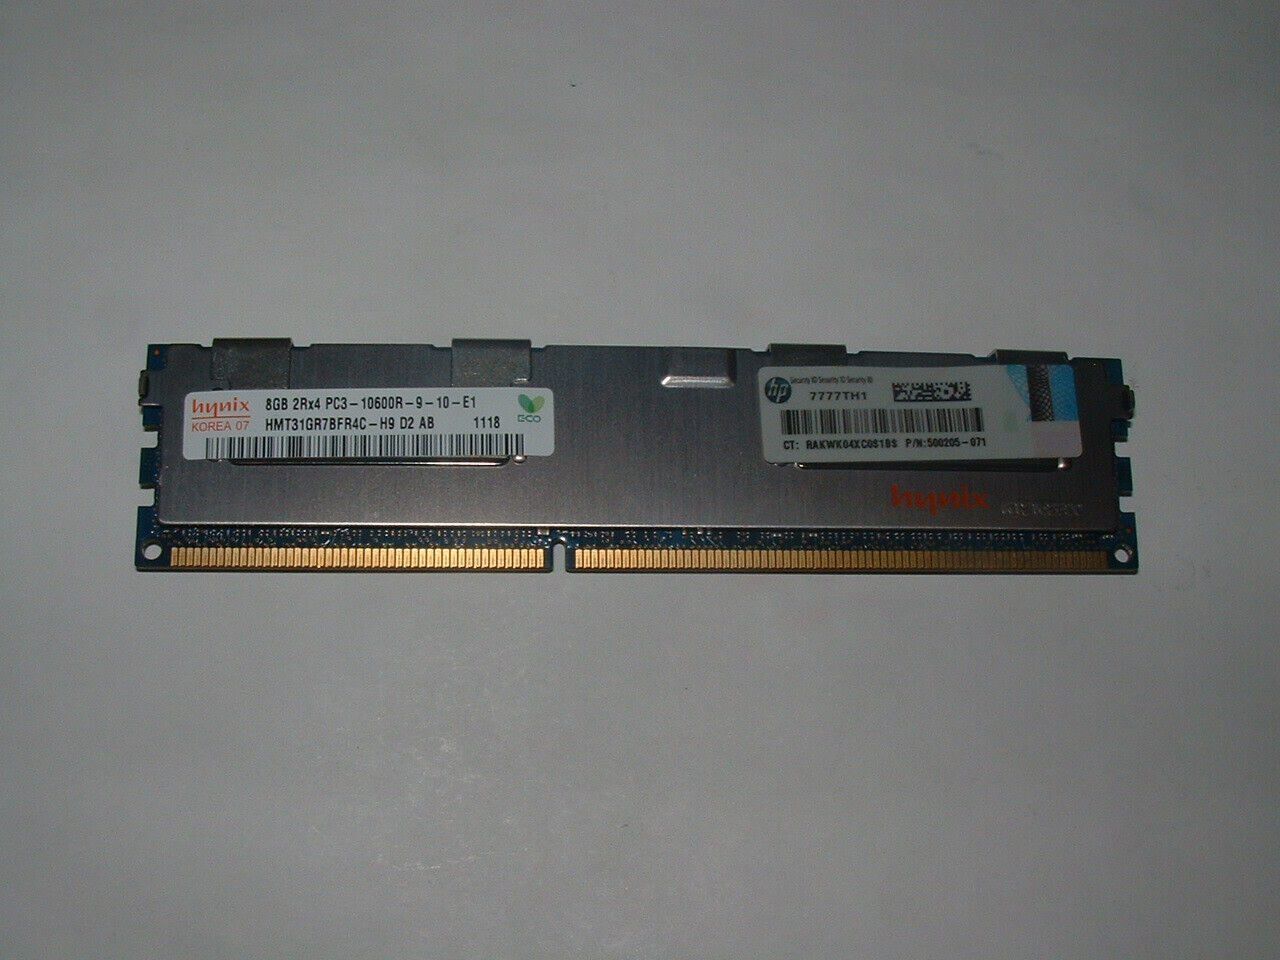 Hynix 9x 8GB PC3-10600R 2Rx4 DDR3-1333 240-Pin Server Memory